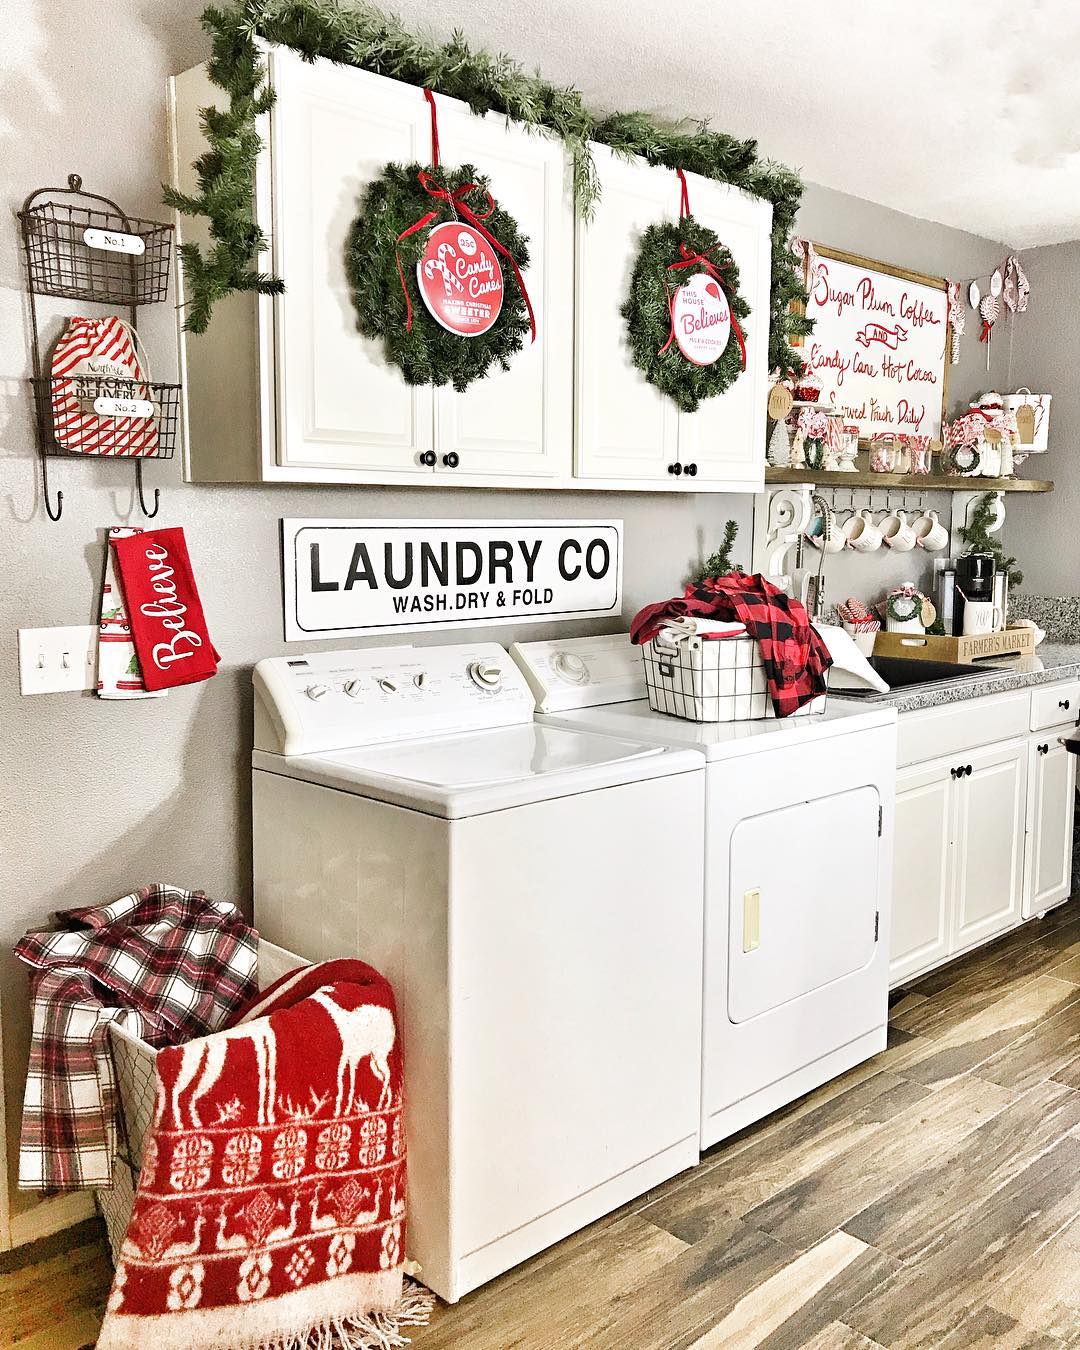 Christmas Laundry Room Decor Wreaths on the Cabinets via @fancyfixdecor